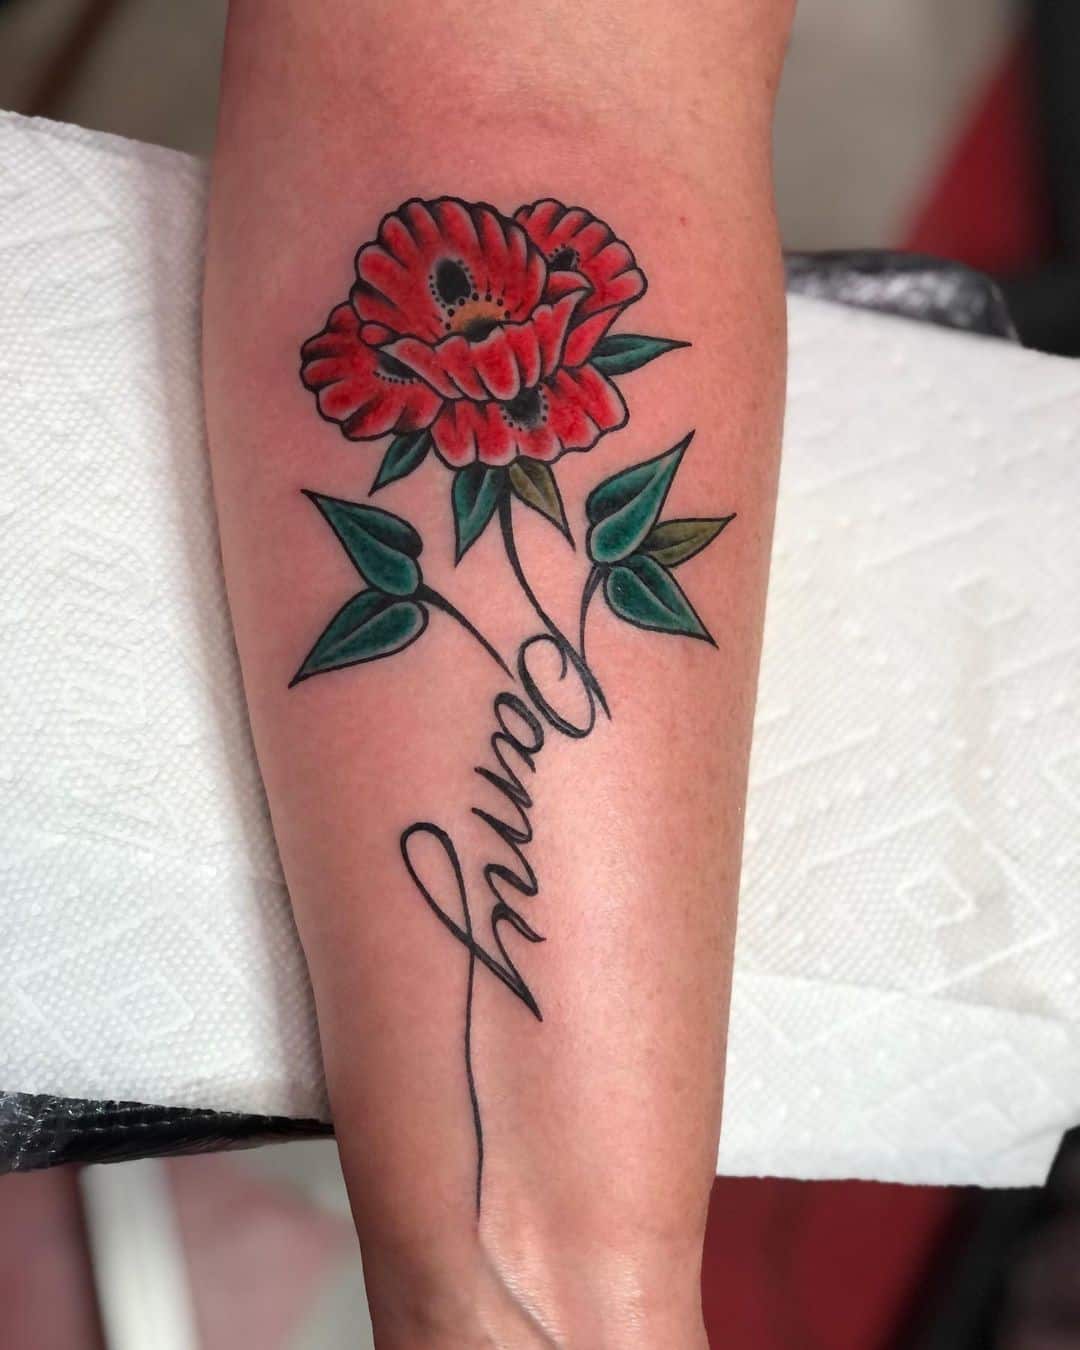 Tatuaje de flor de amapola roja con etiqueta de nombre